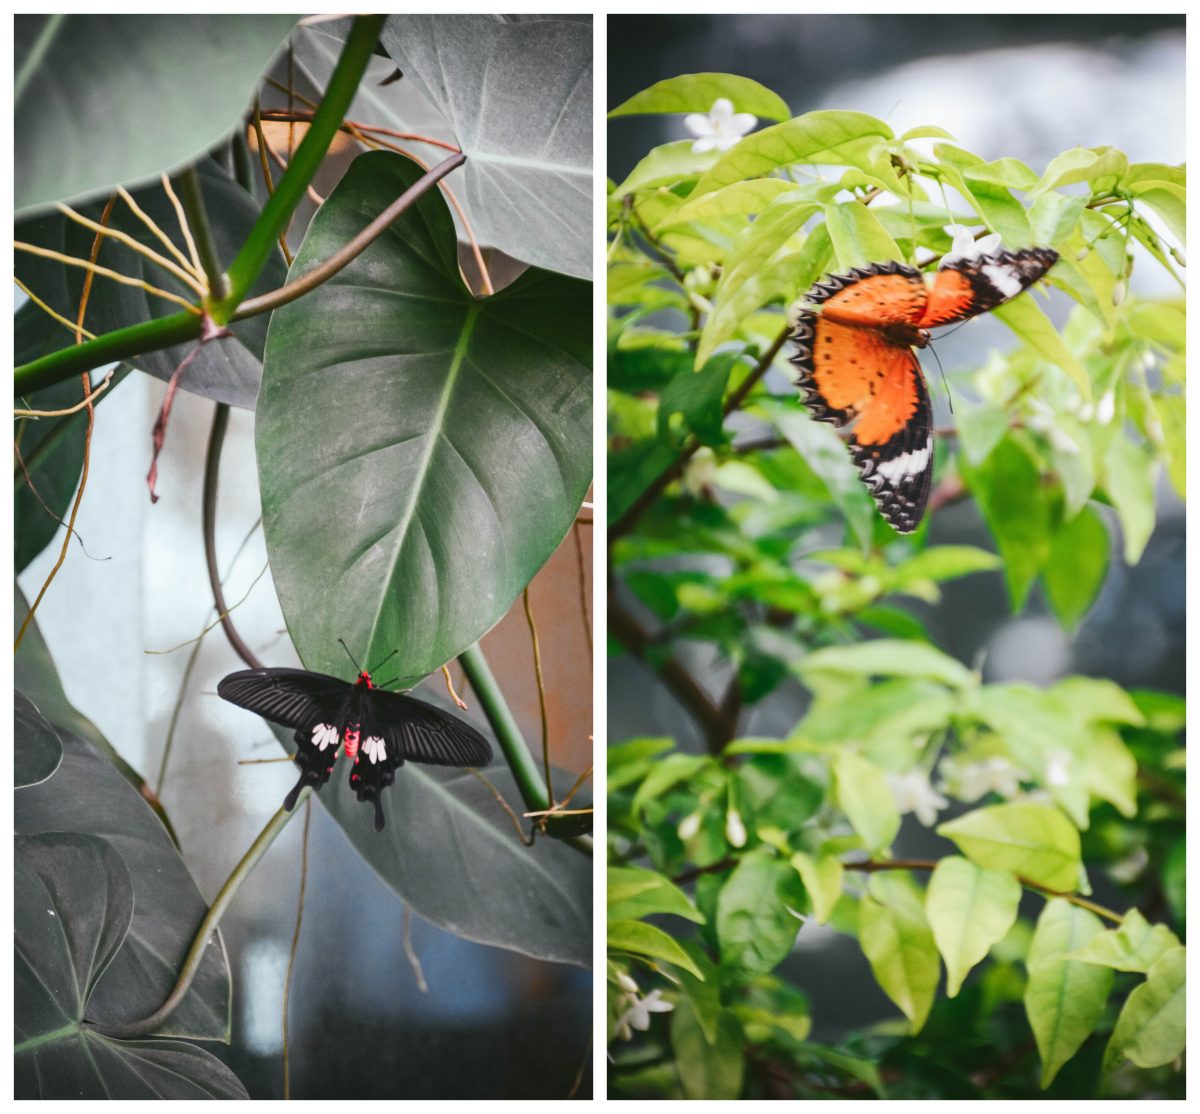 Butterfly garden, Changi airport